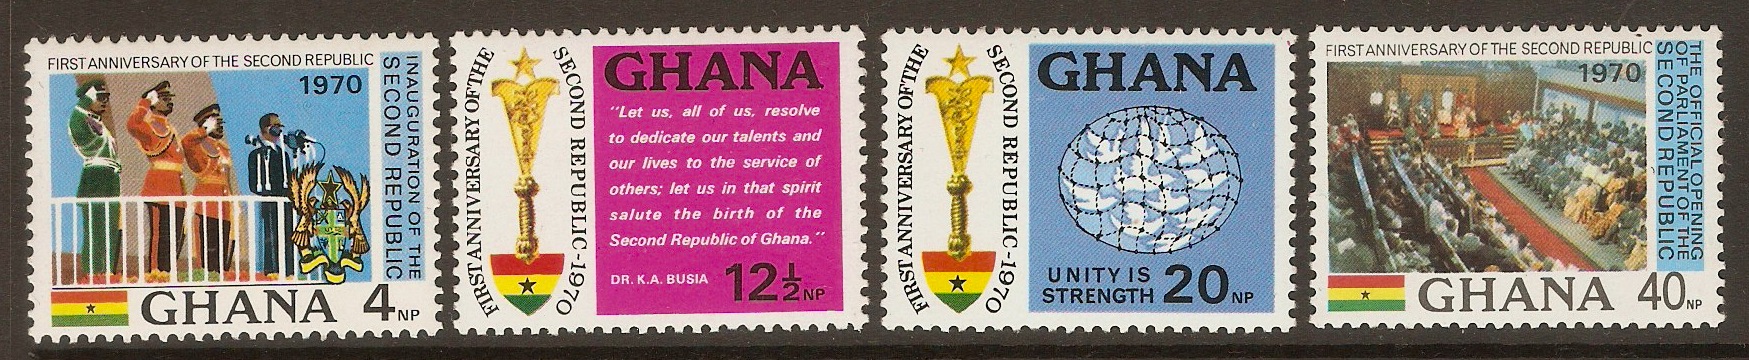 Ghana 1970 Second Republic Anniversary Set. SG582-SG585.